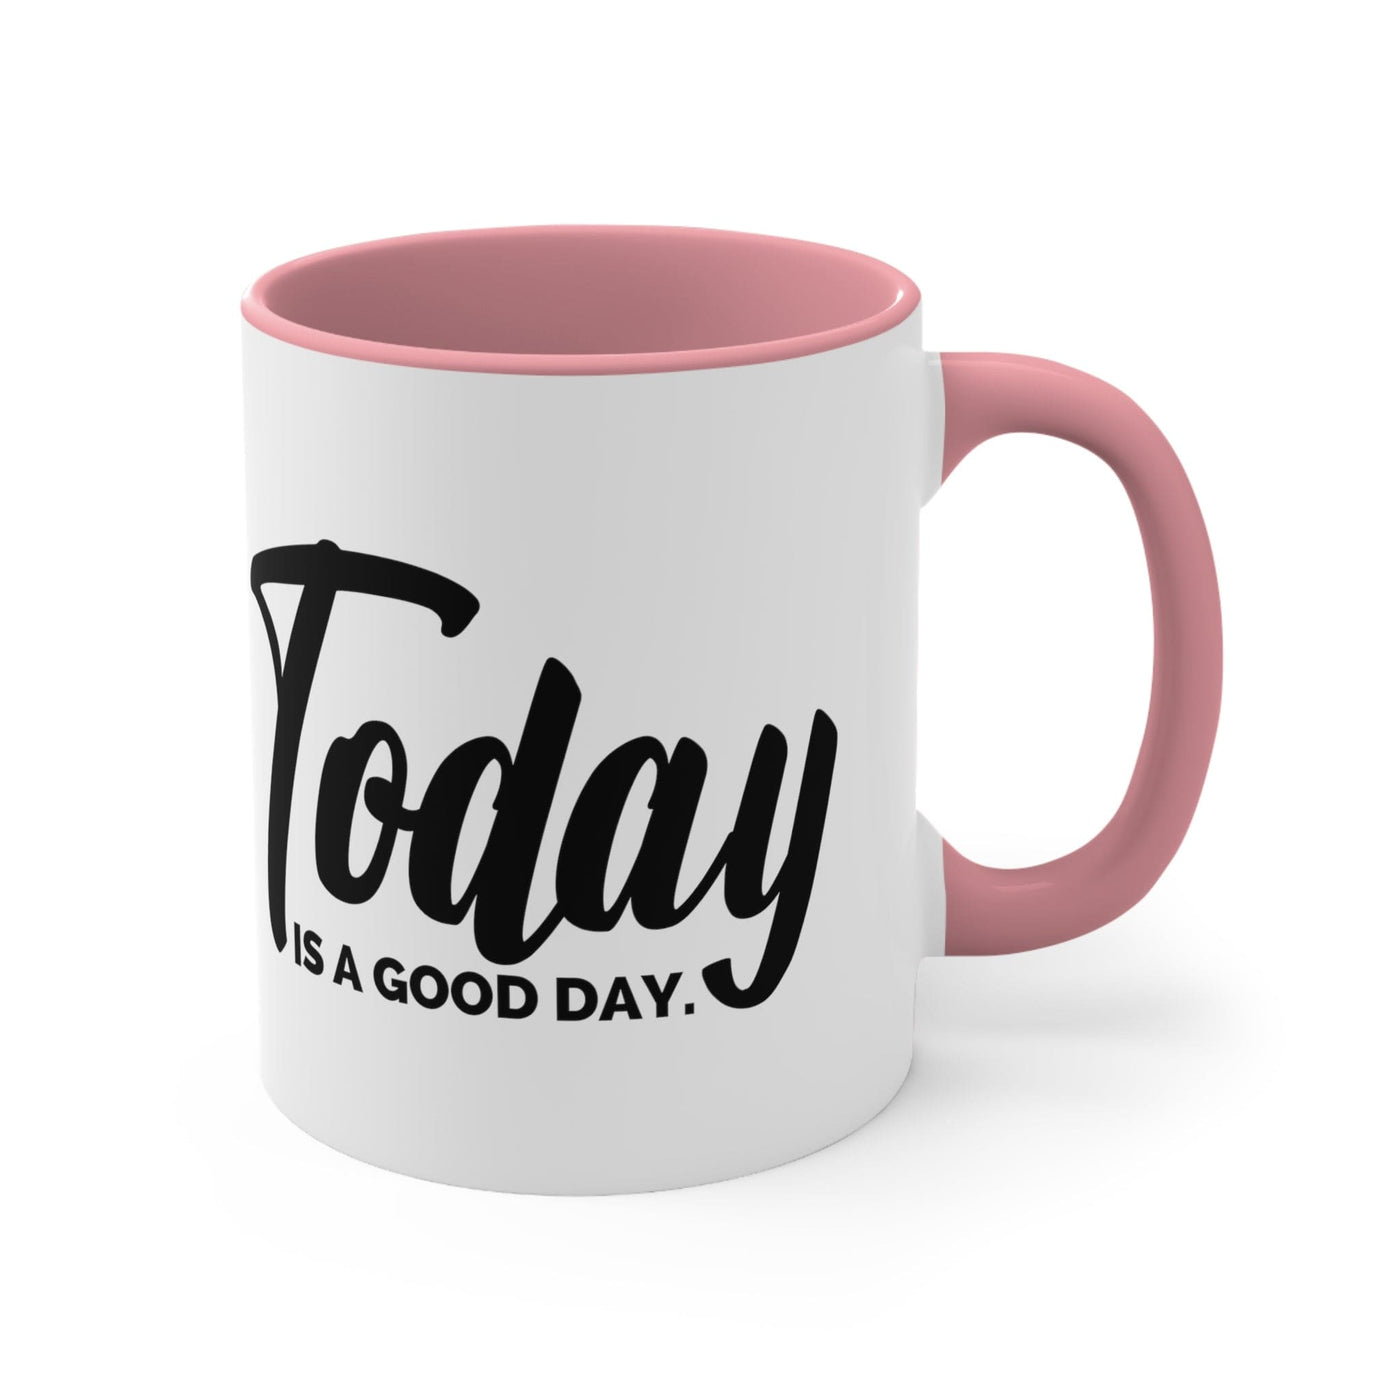 Accent Ceramic Mug 11oz Today Is a Good Day Black Illustration - Decorative